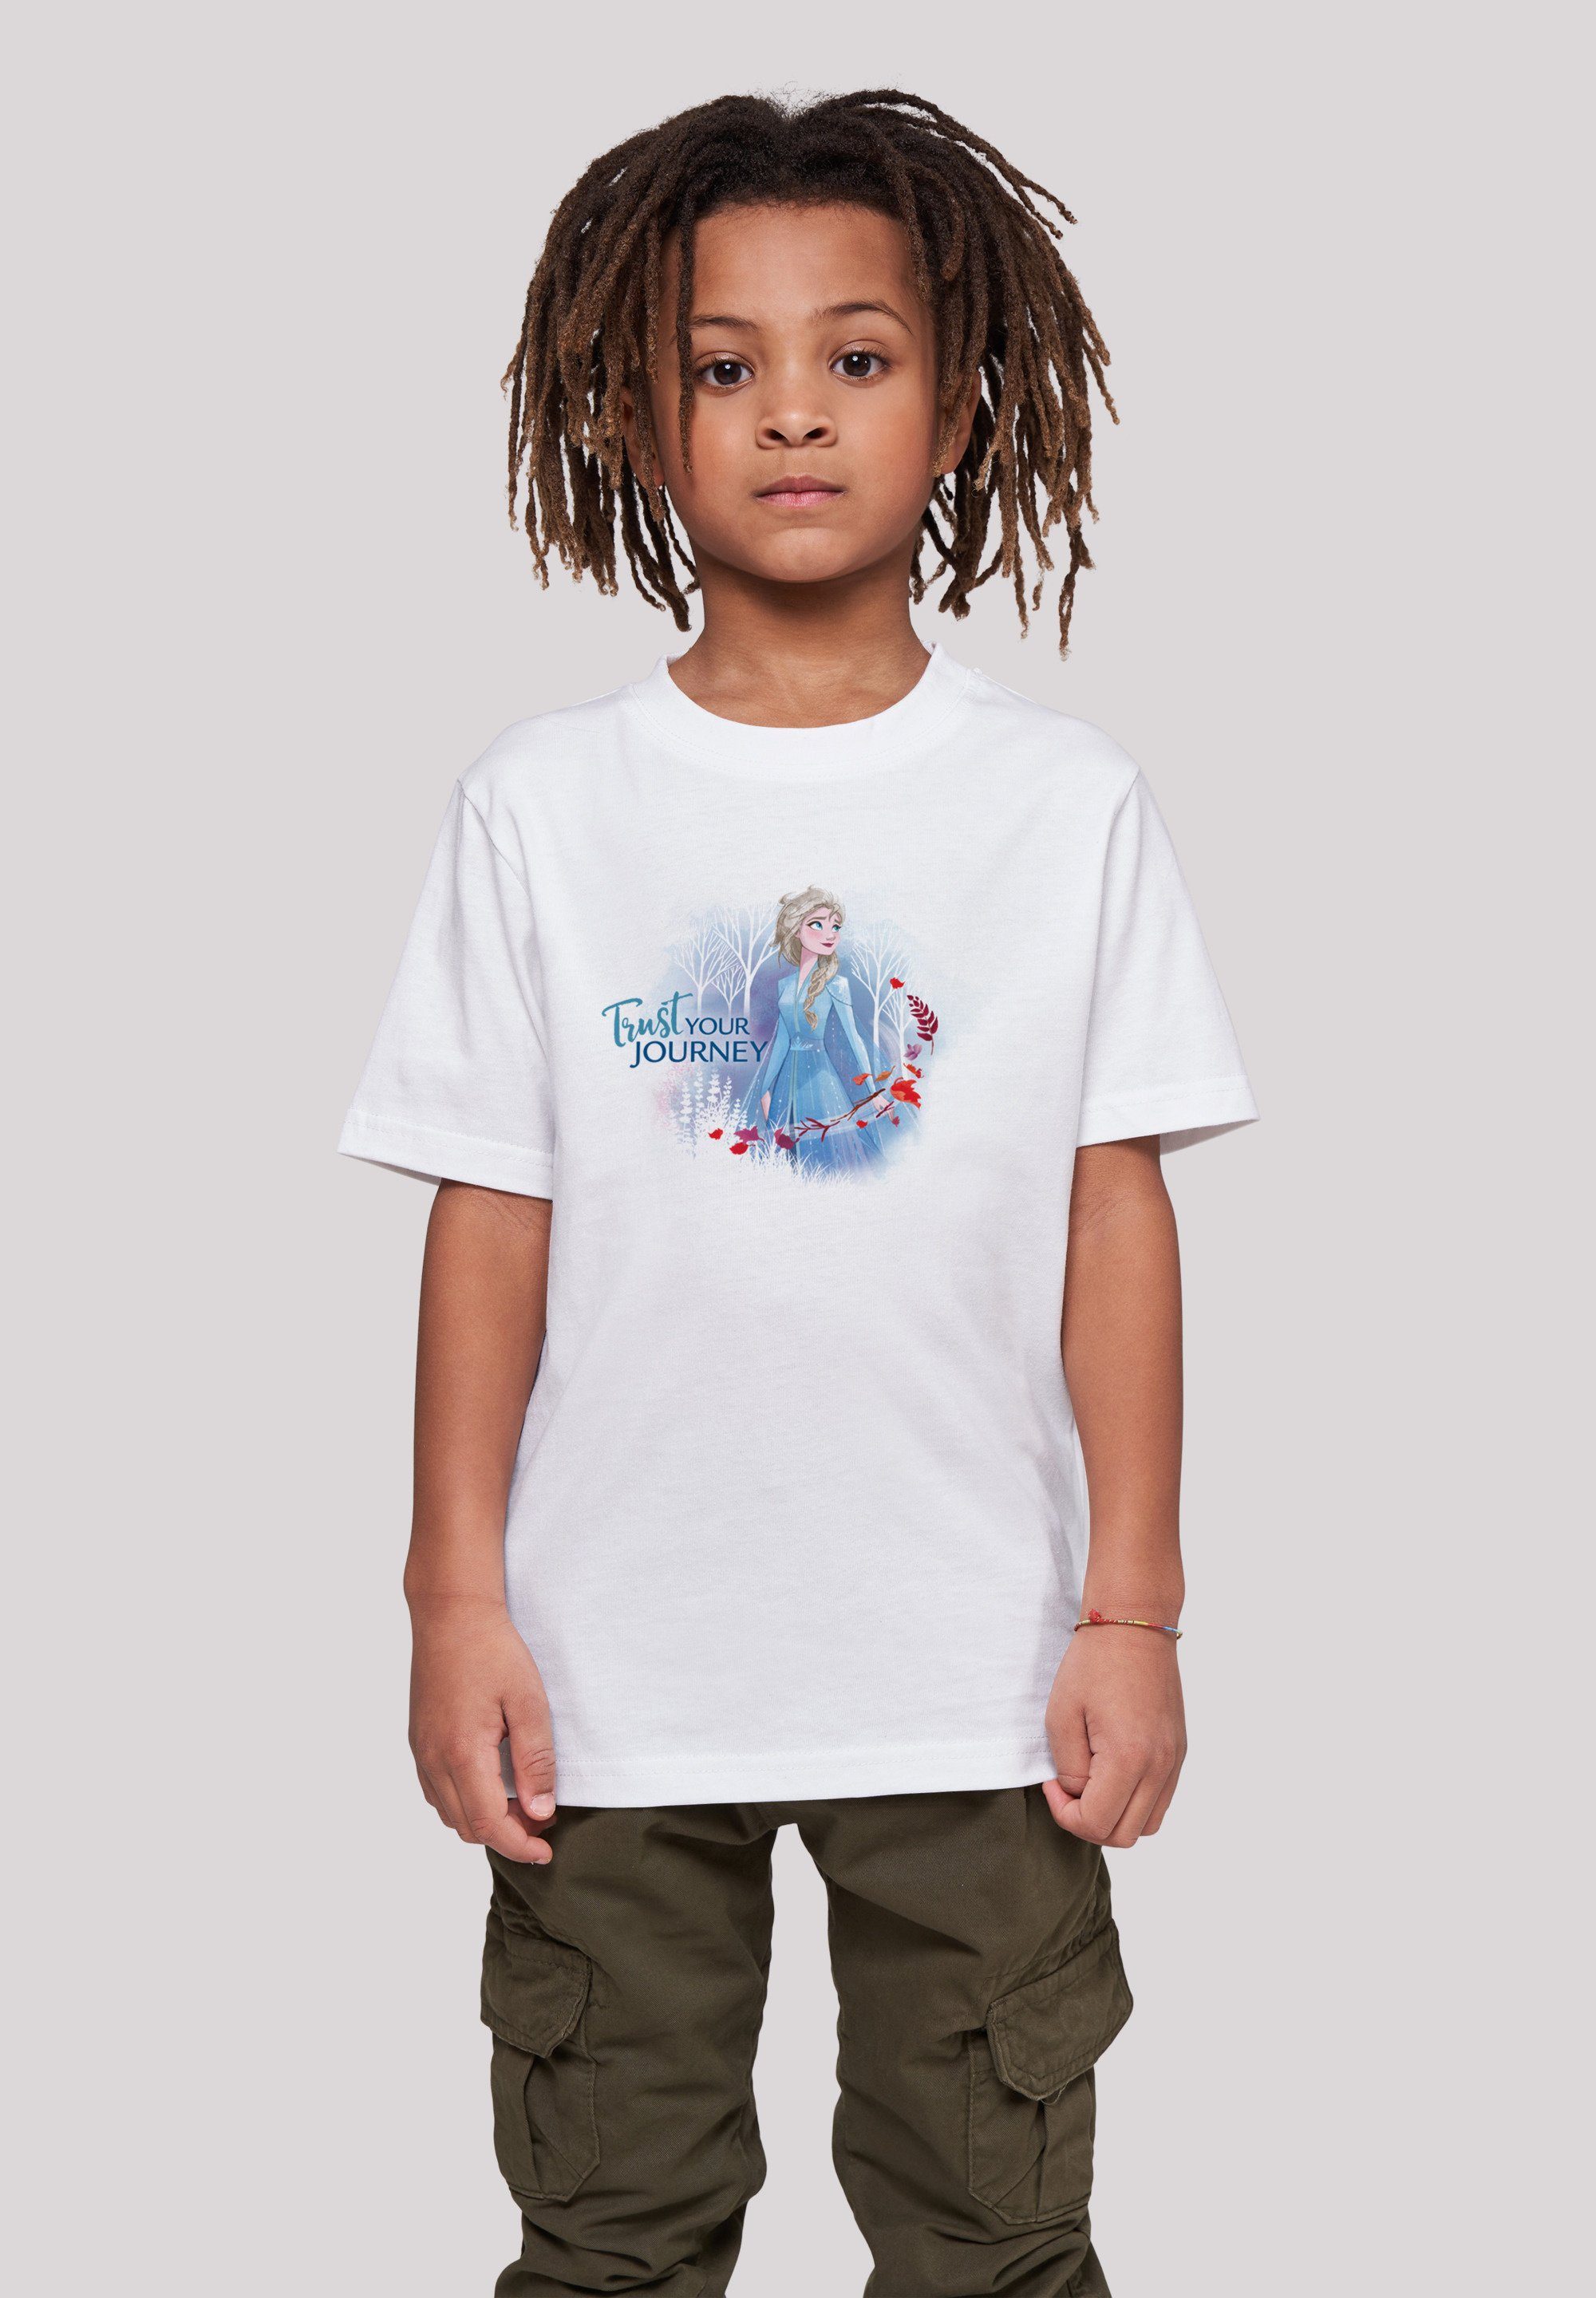 T-Shirt Frozen Your Print Journey weiß Disney Trust F4NT4STIC 2